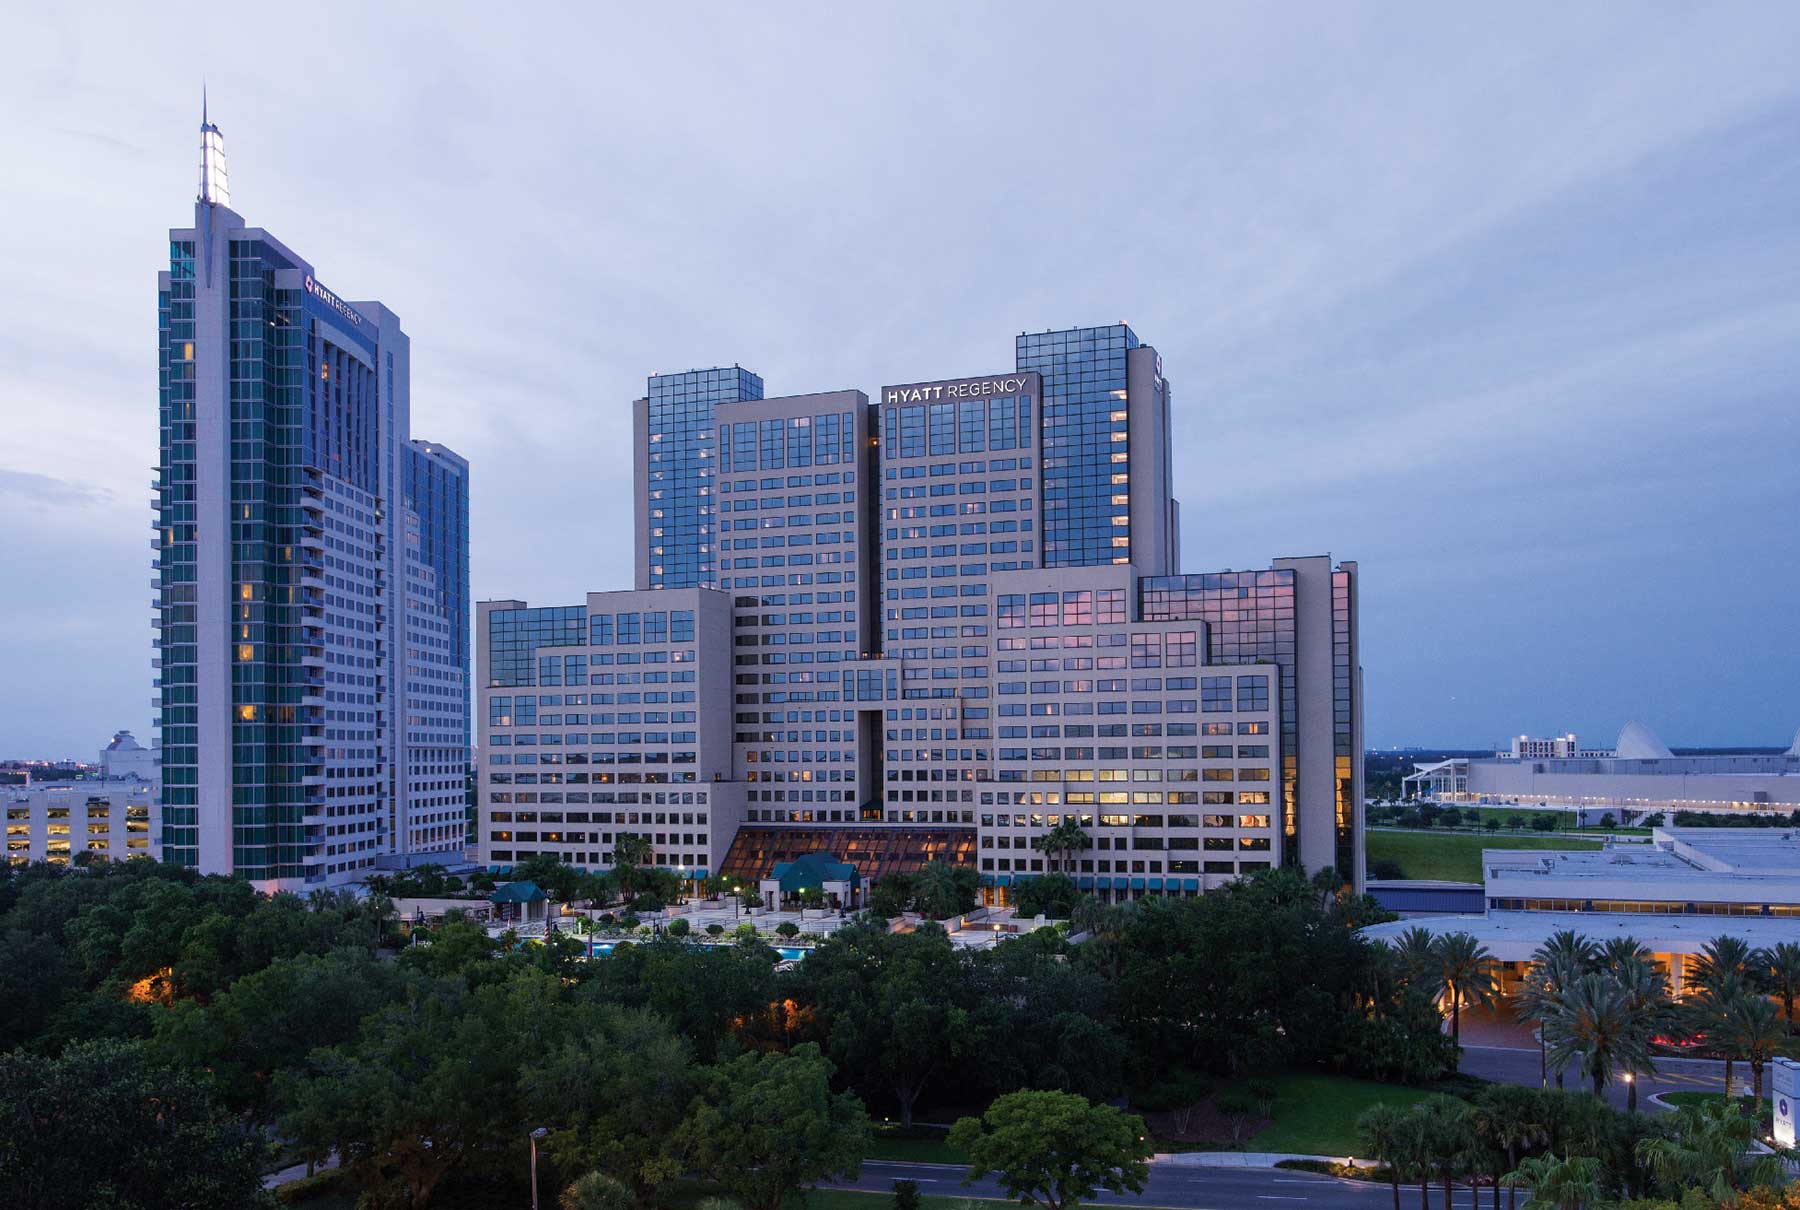 The Hyatt Regency Orlando sits adjacent to the Orange County Convention Center.